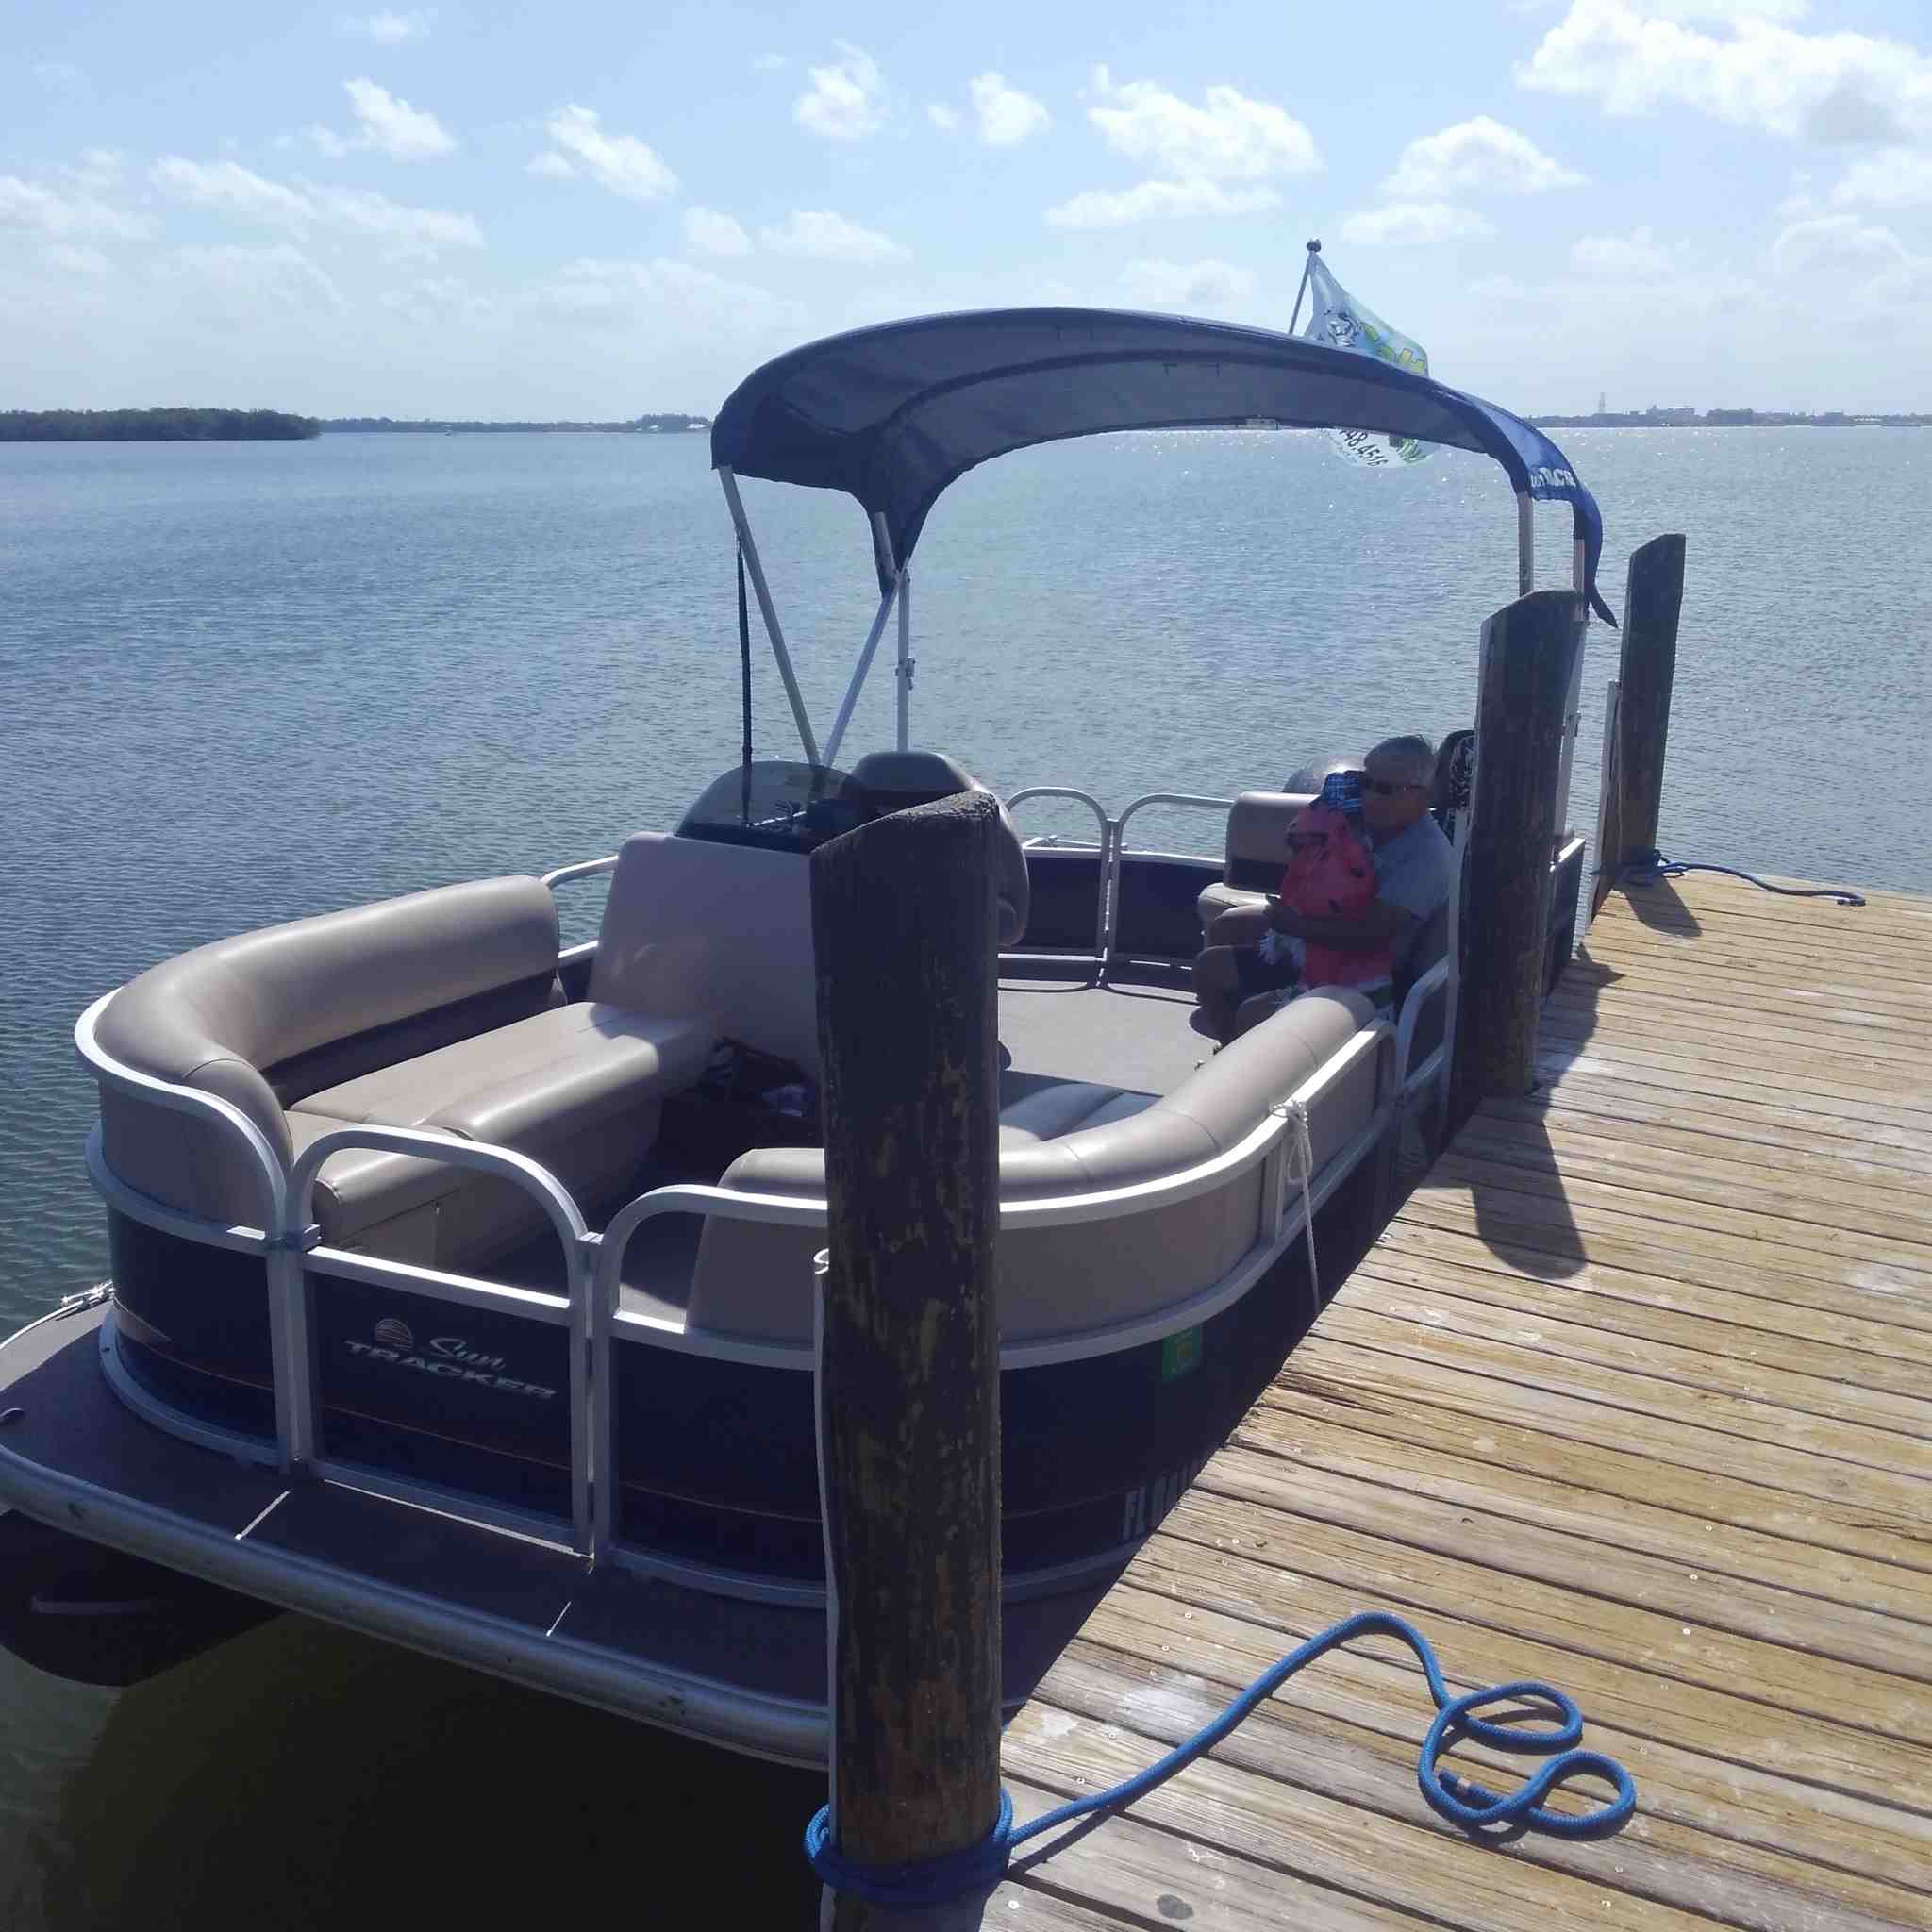  boat rentals Florida FORT PIERCE Florida  SunTracker Party Barge 2018 18 